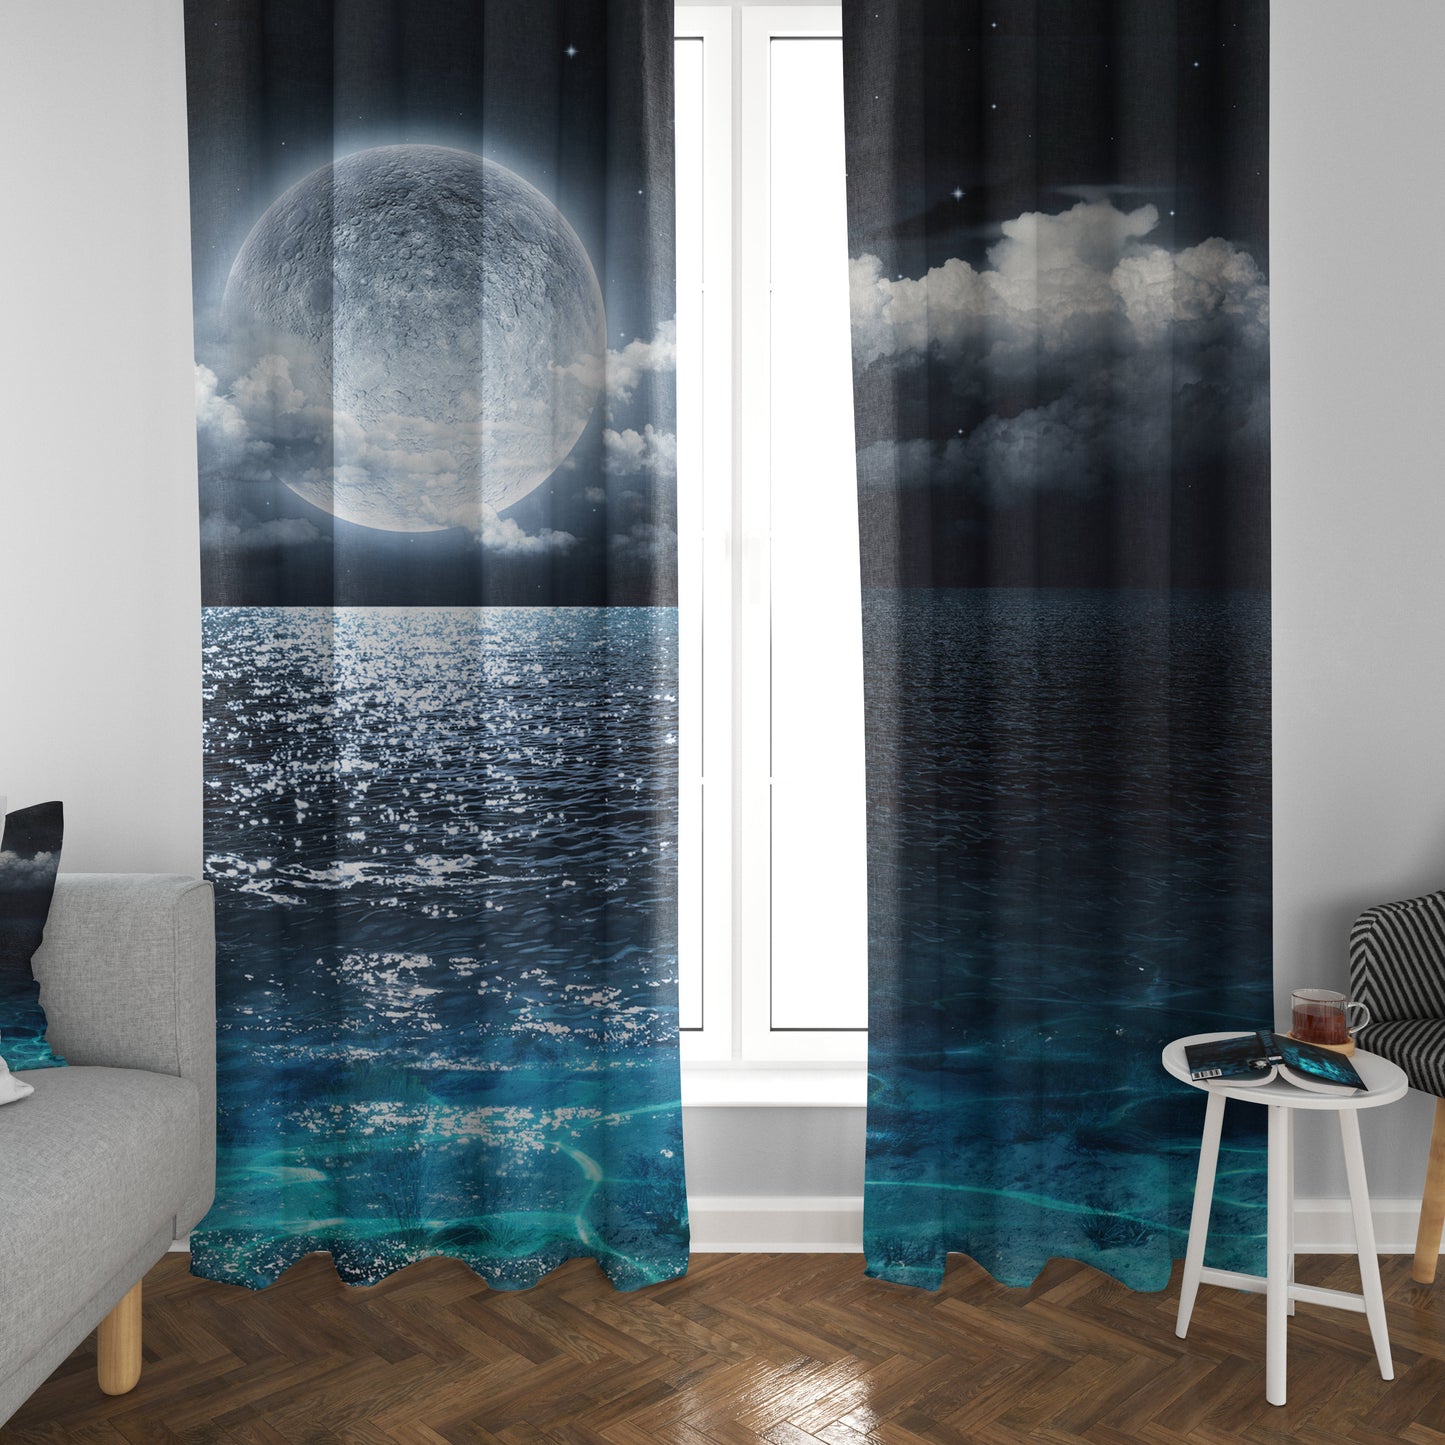 Moon over Ocean Window Curtains Beach Drapery Curtain Panels full moon window treatment beachy curtain tropical curtains blue